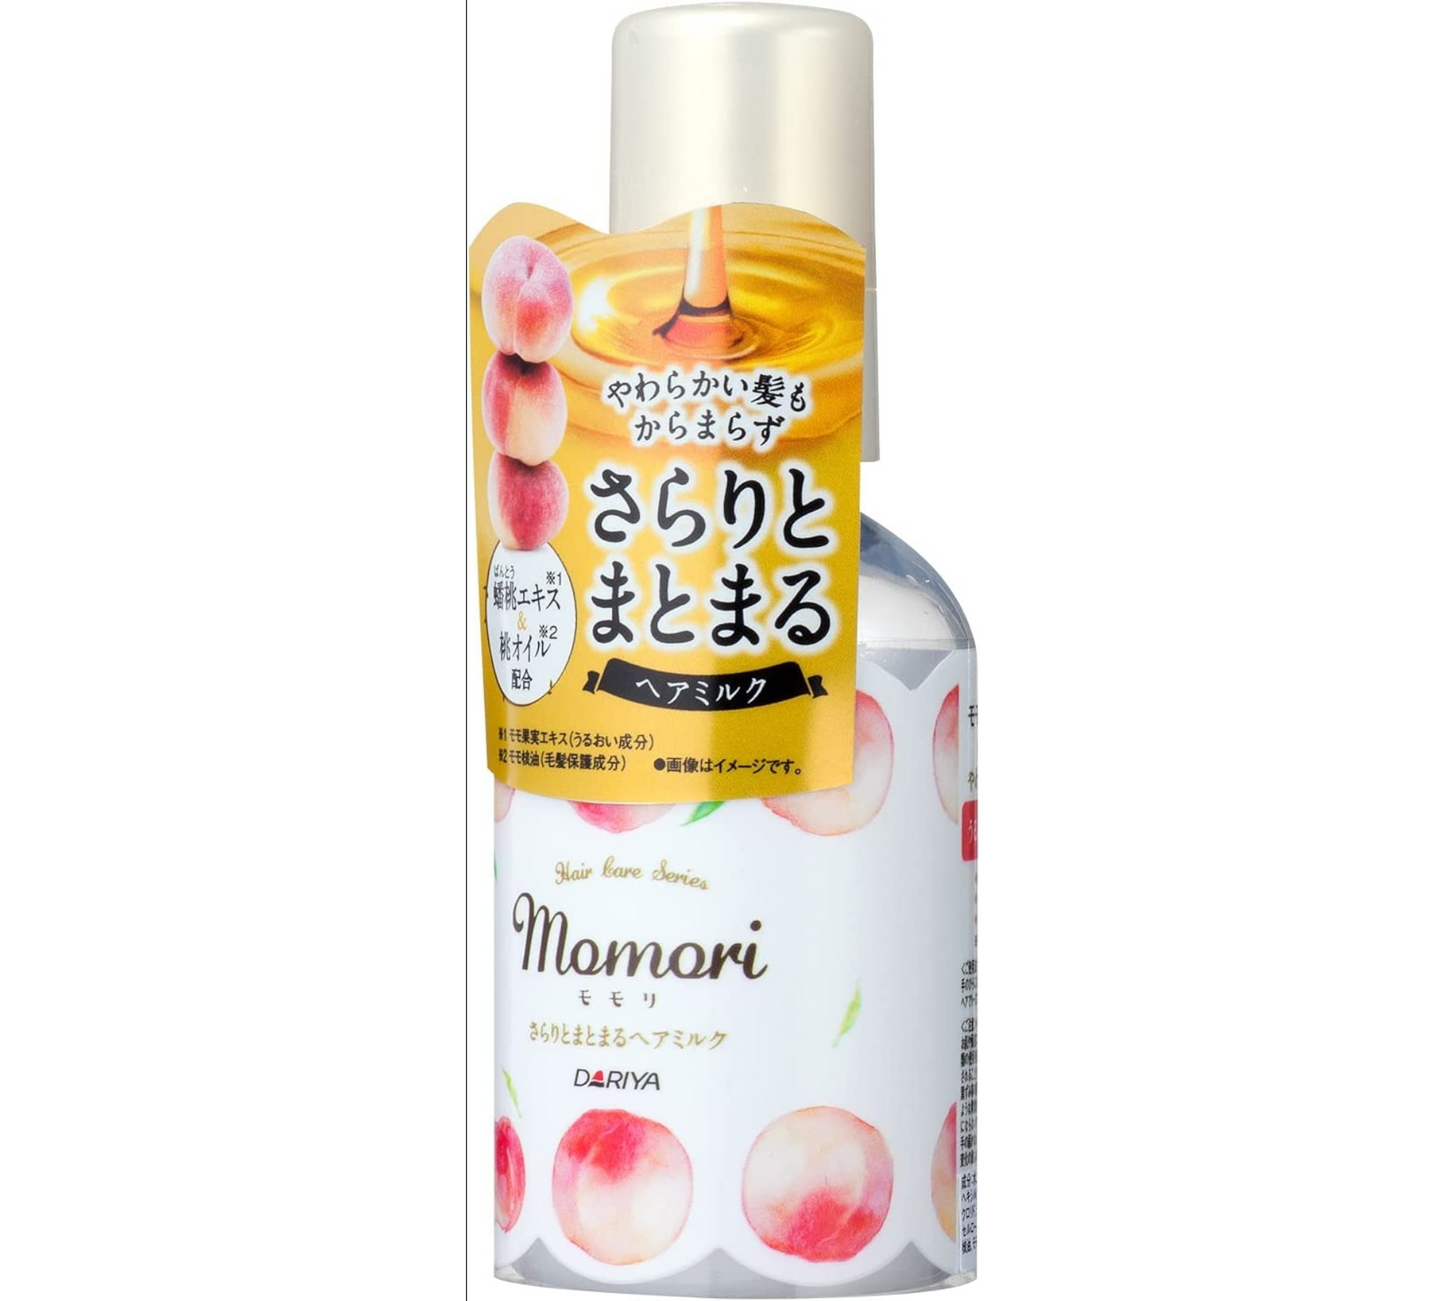 Dariya Cupid Beauty Supplies Hair Treatments Momori Peach Light & Cohesive Hair Milk